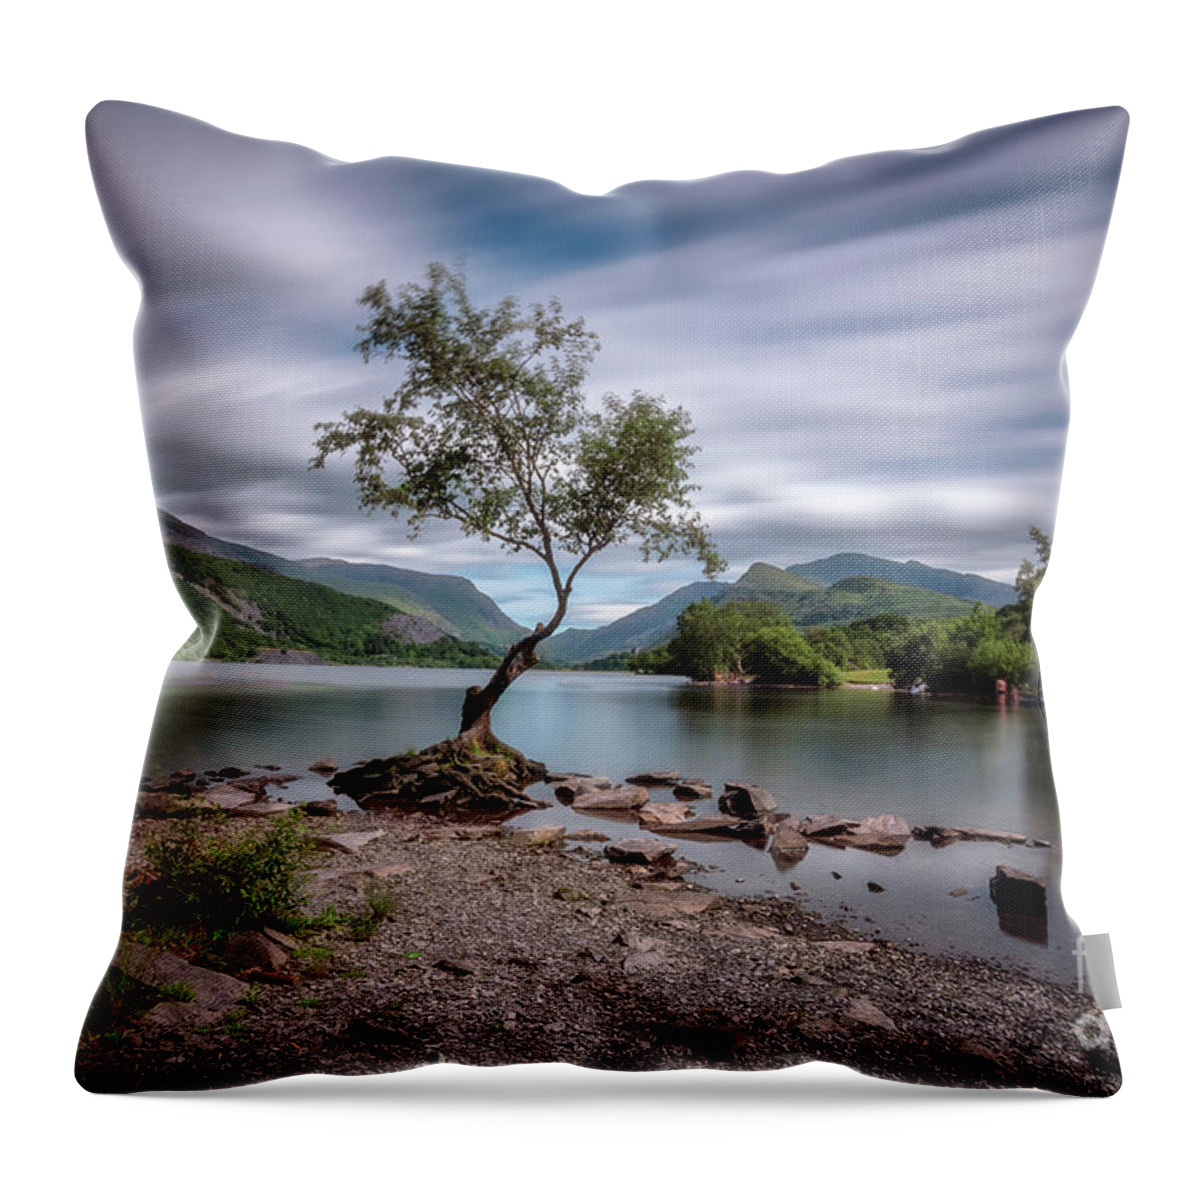 Llyn Padarn Throw Pillow featuring the photograph The lonely tree at Llyn Padarn lake - Part 1 by Mariusz Talarek